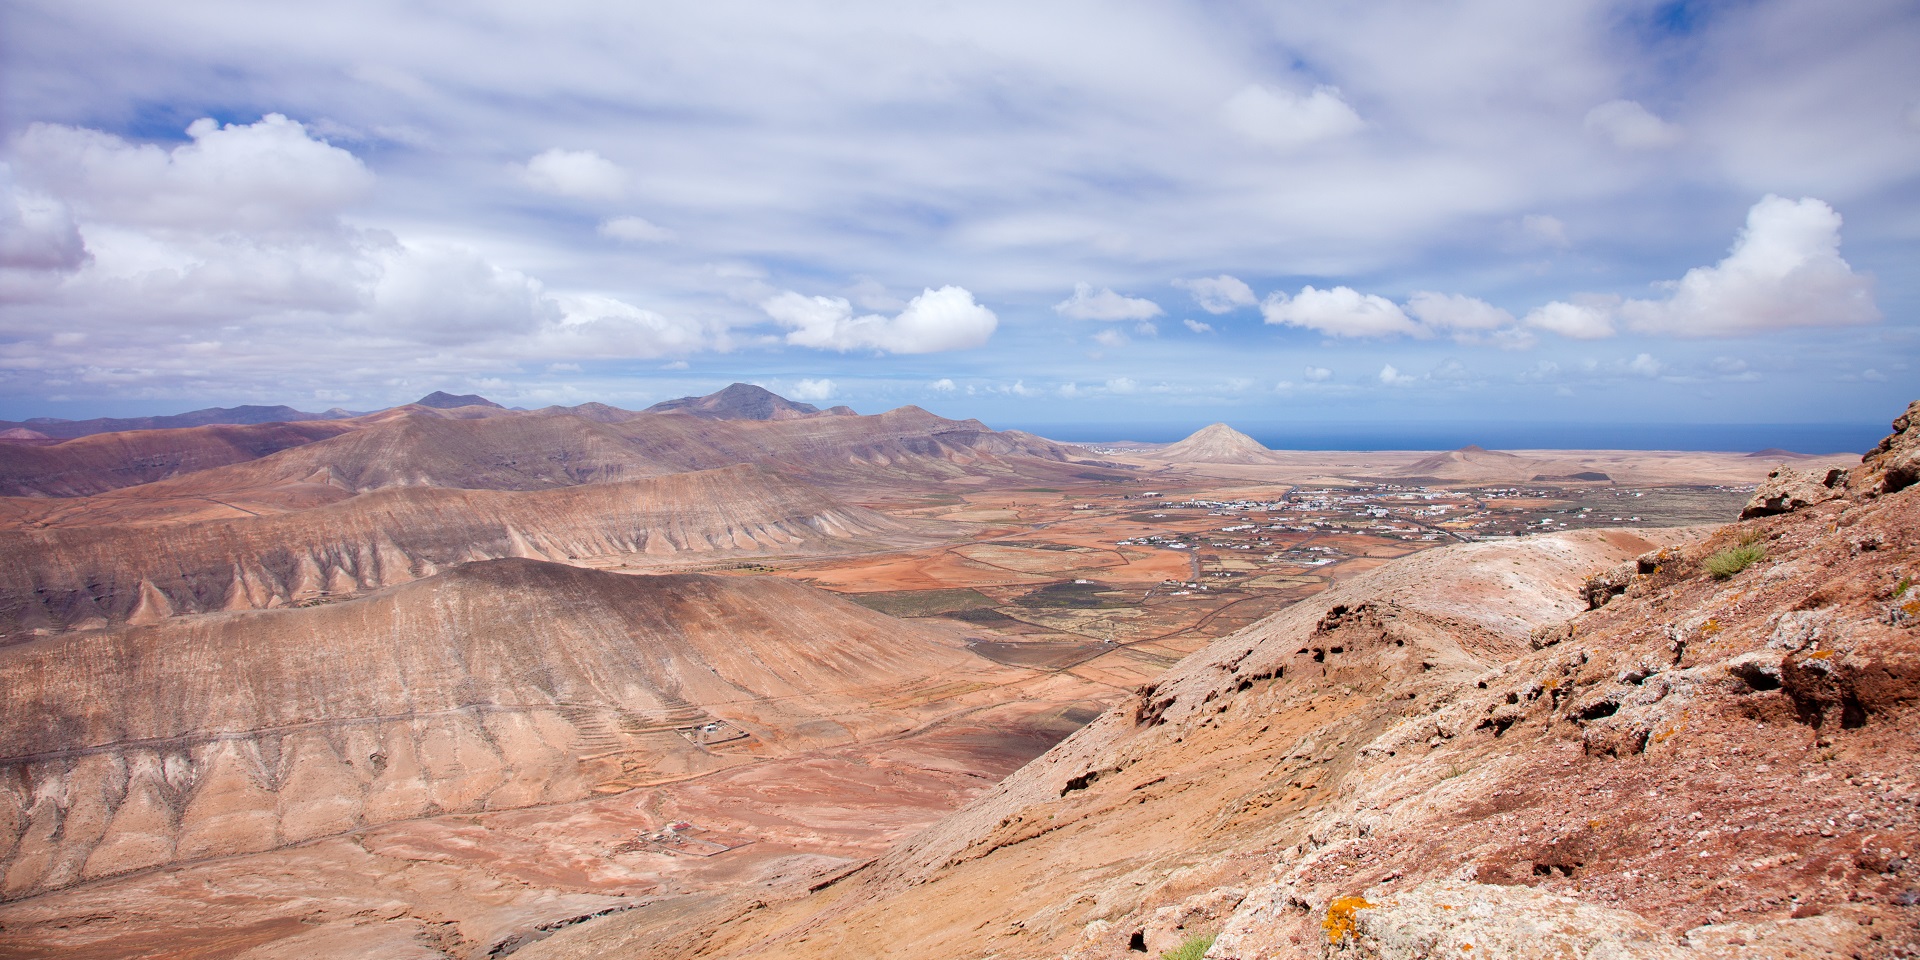 Fuerteventura, Canary Islands of Spain